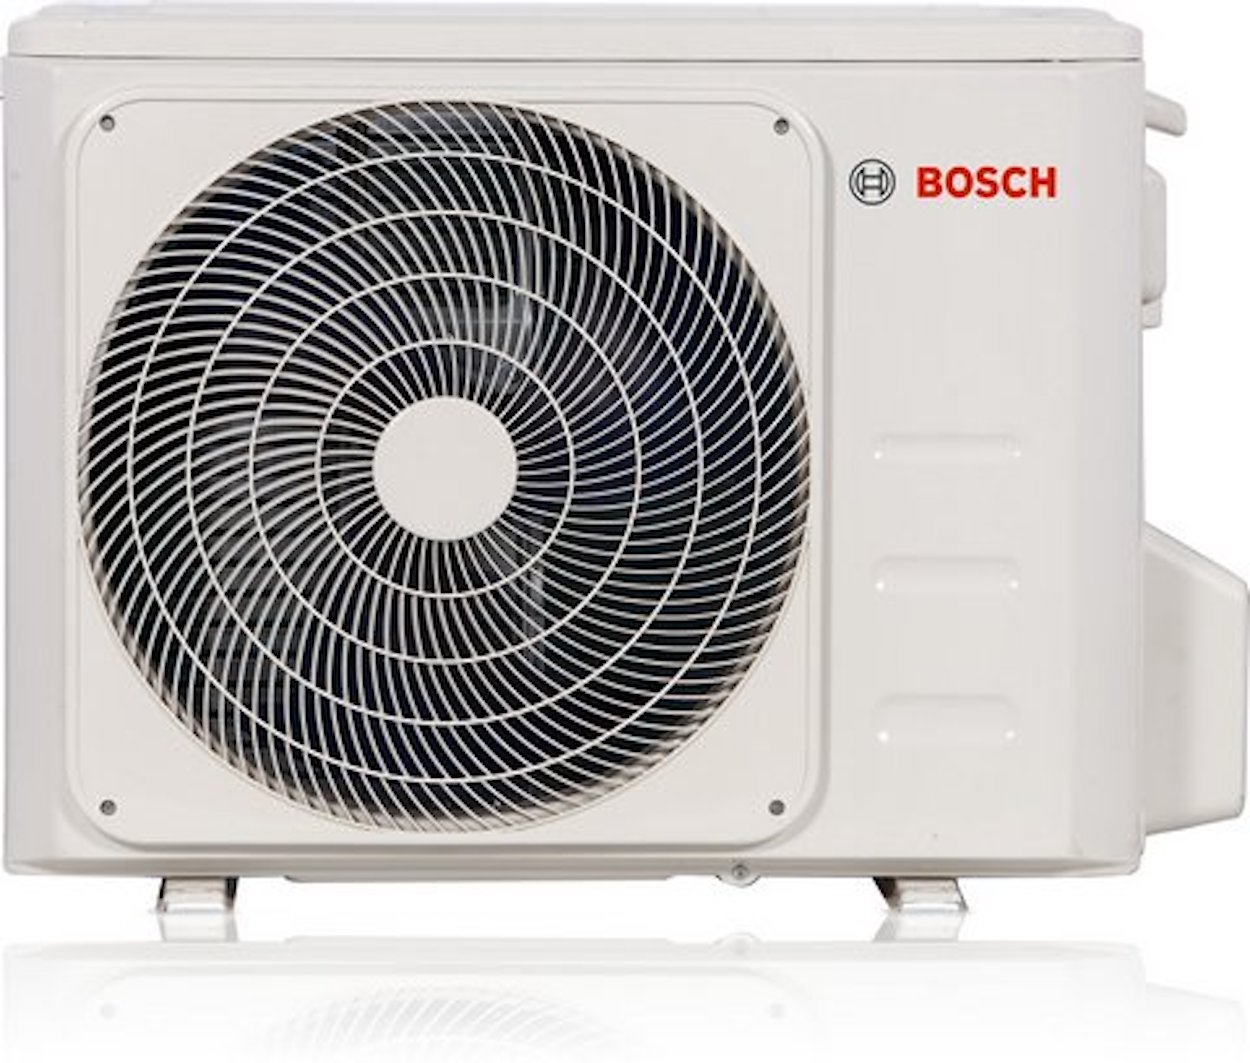 BOSCH Klimagerät CL5000 RAC 3,5-2 OUE Split Außeneinheit, 550x700x275, 3,5 kW